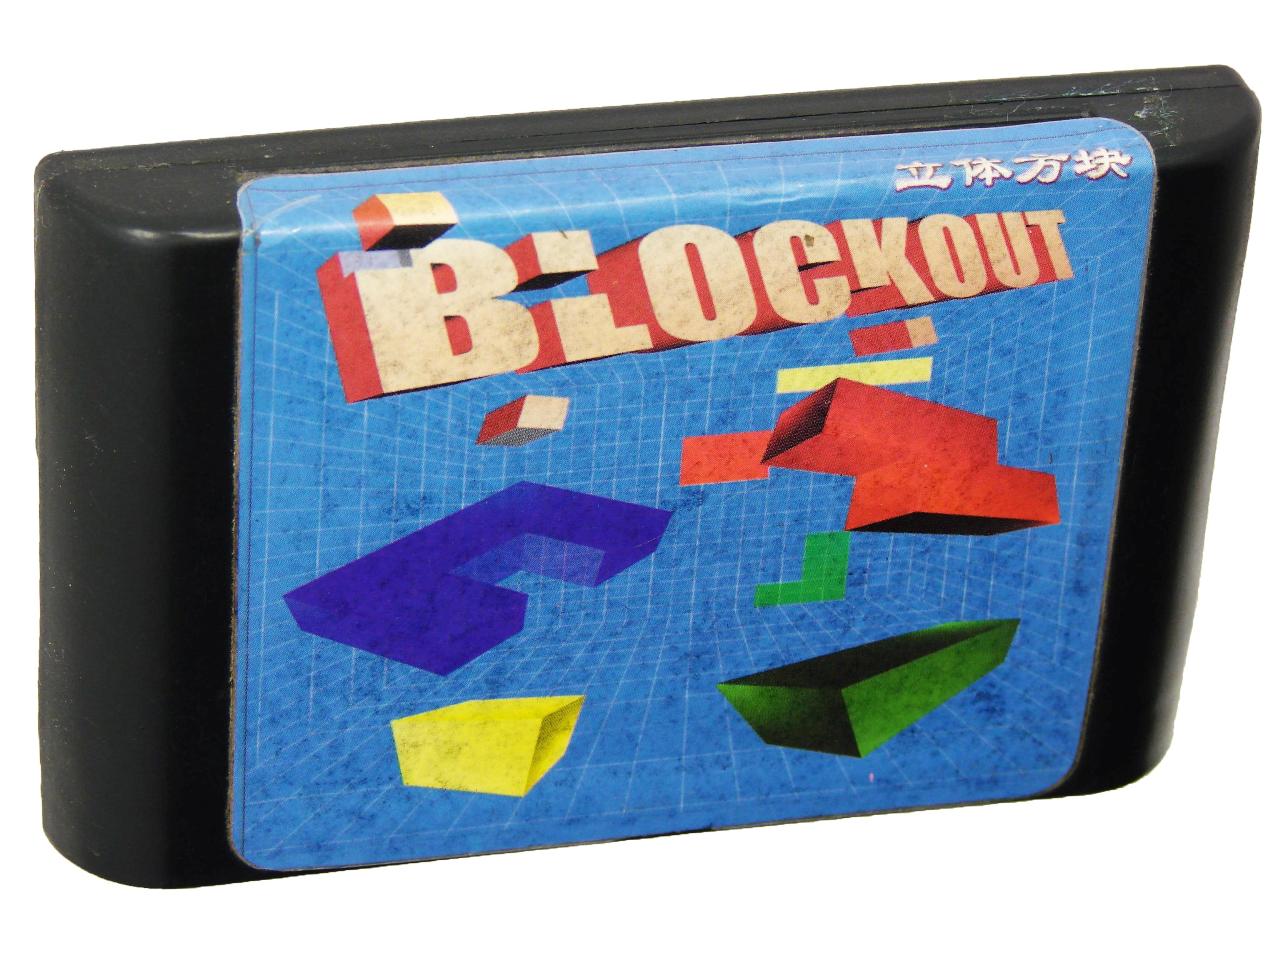   Sega Blockout (Sega)